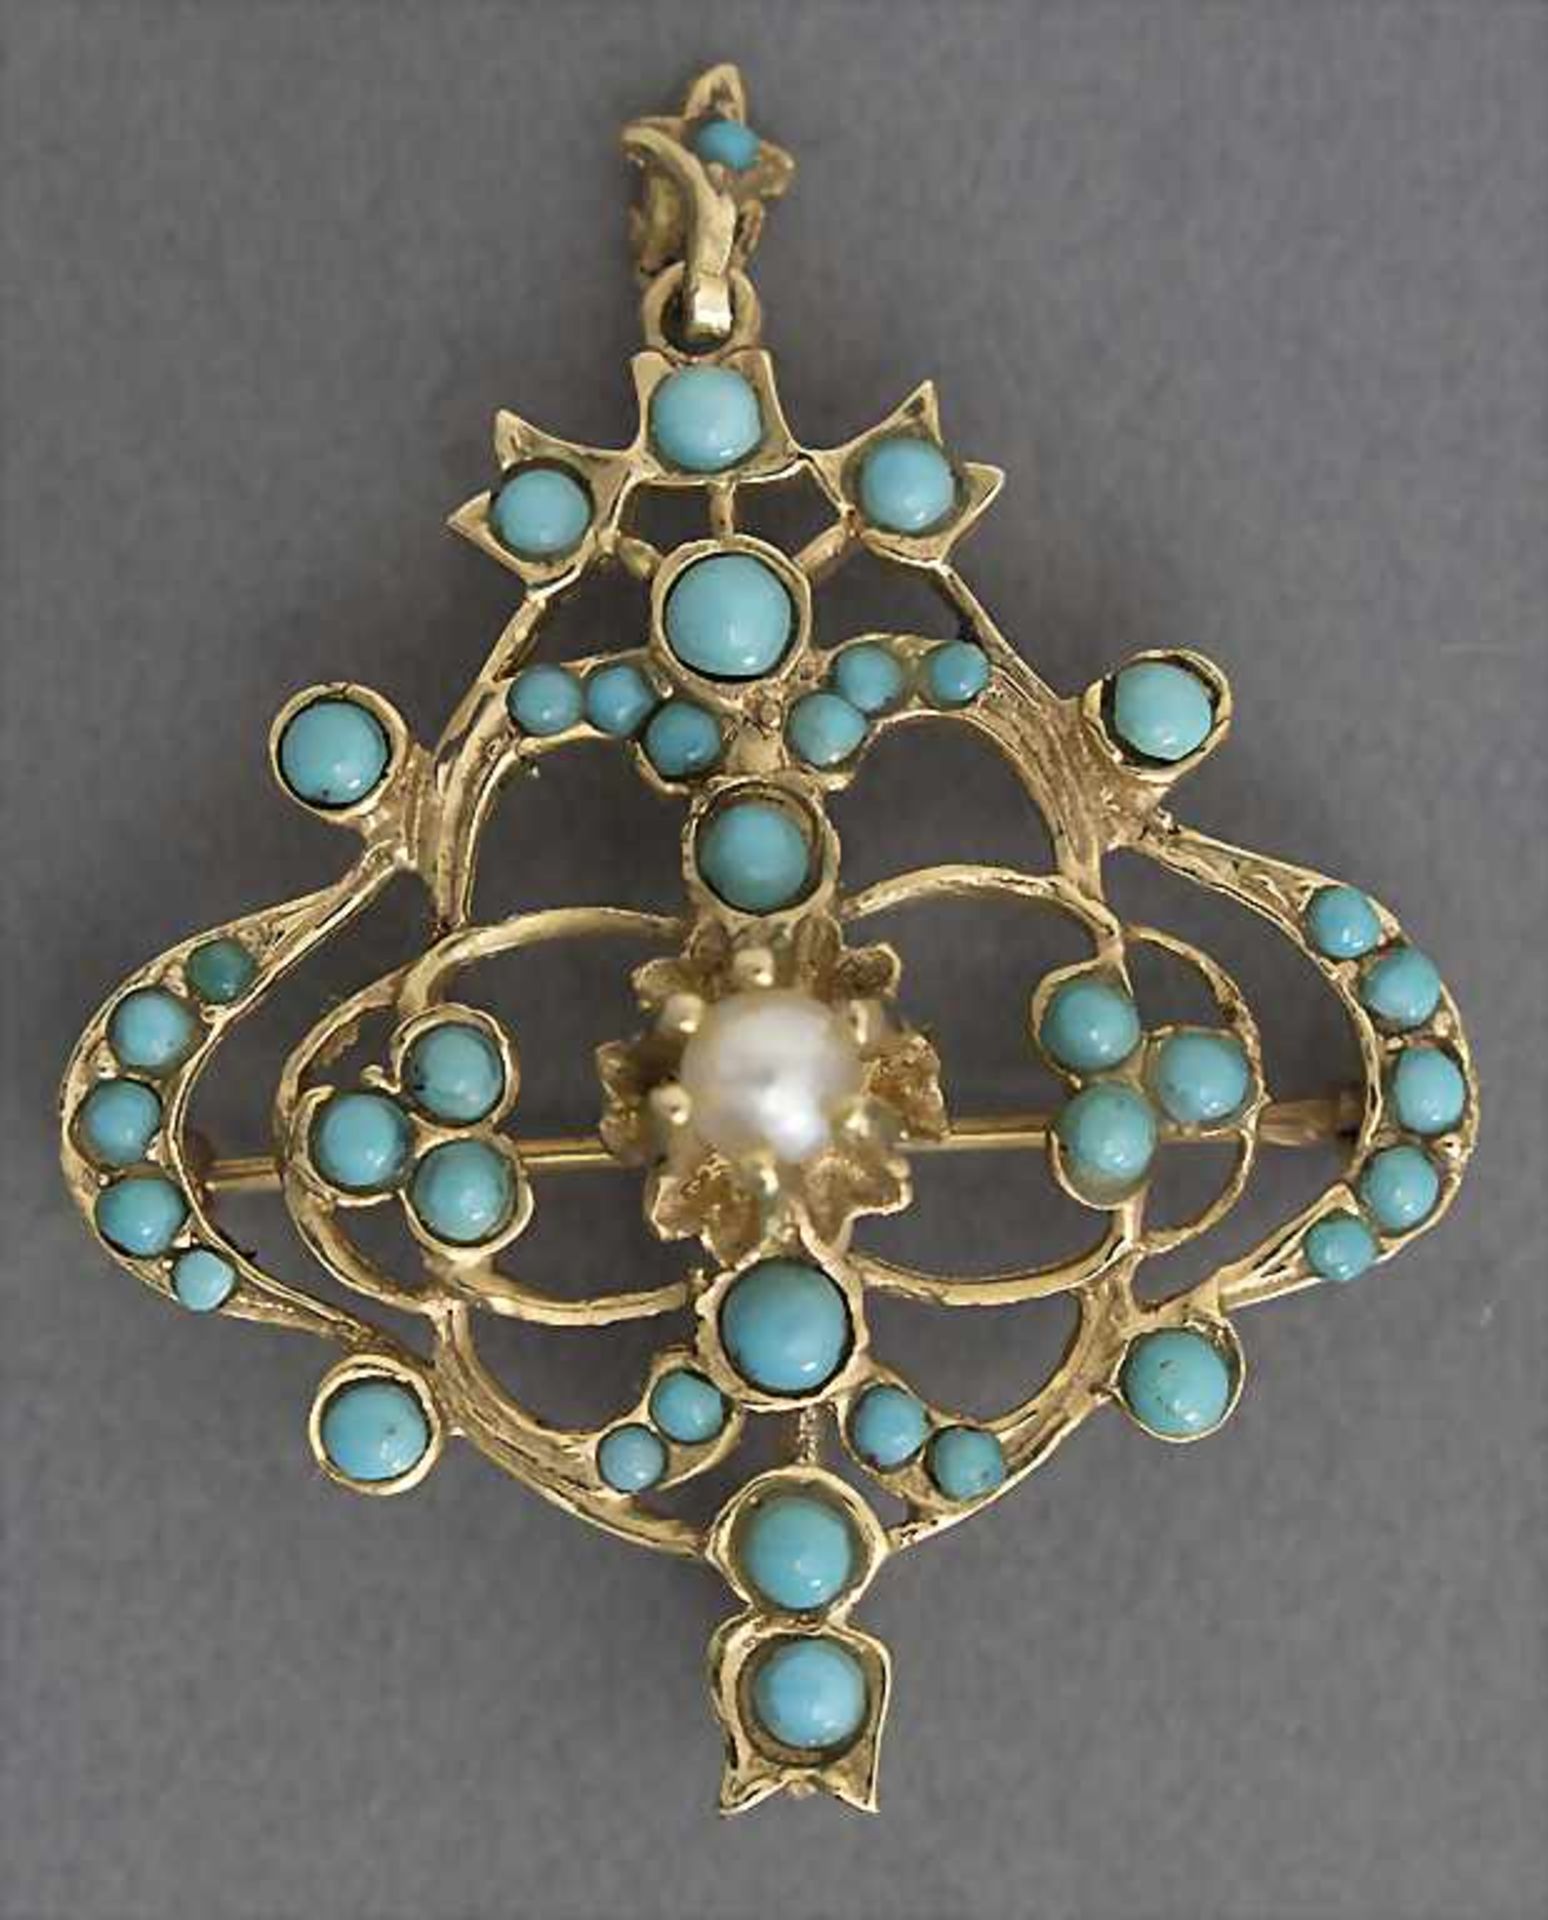 Brosche und Anhänger mit Türkise / A brooch and pendant with turquoise